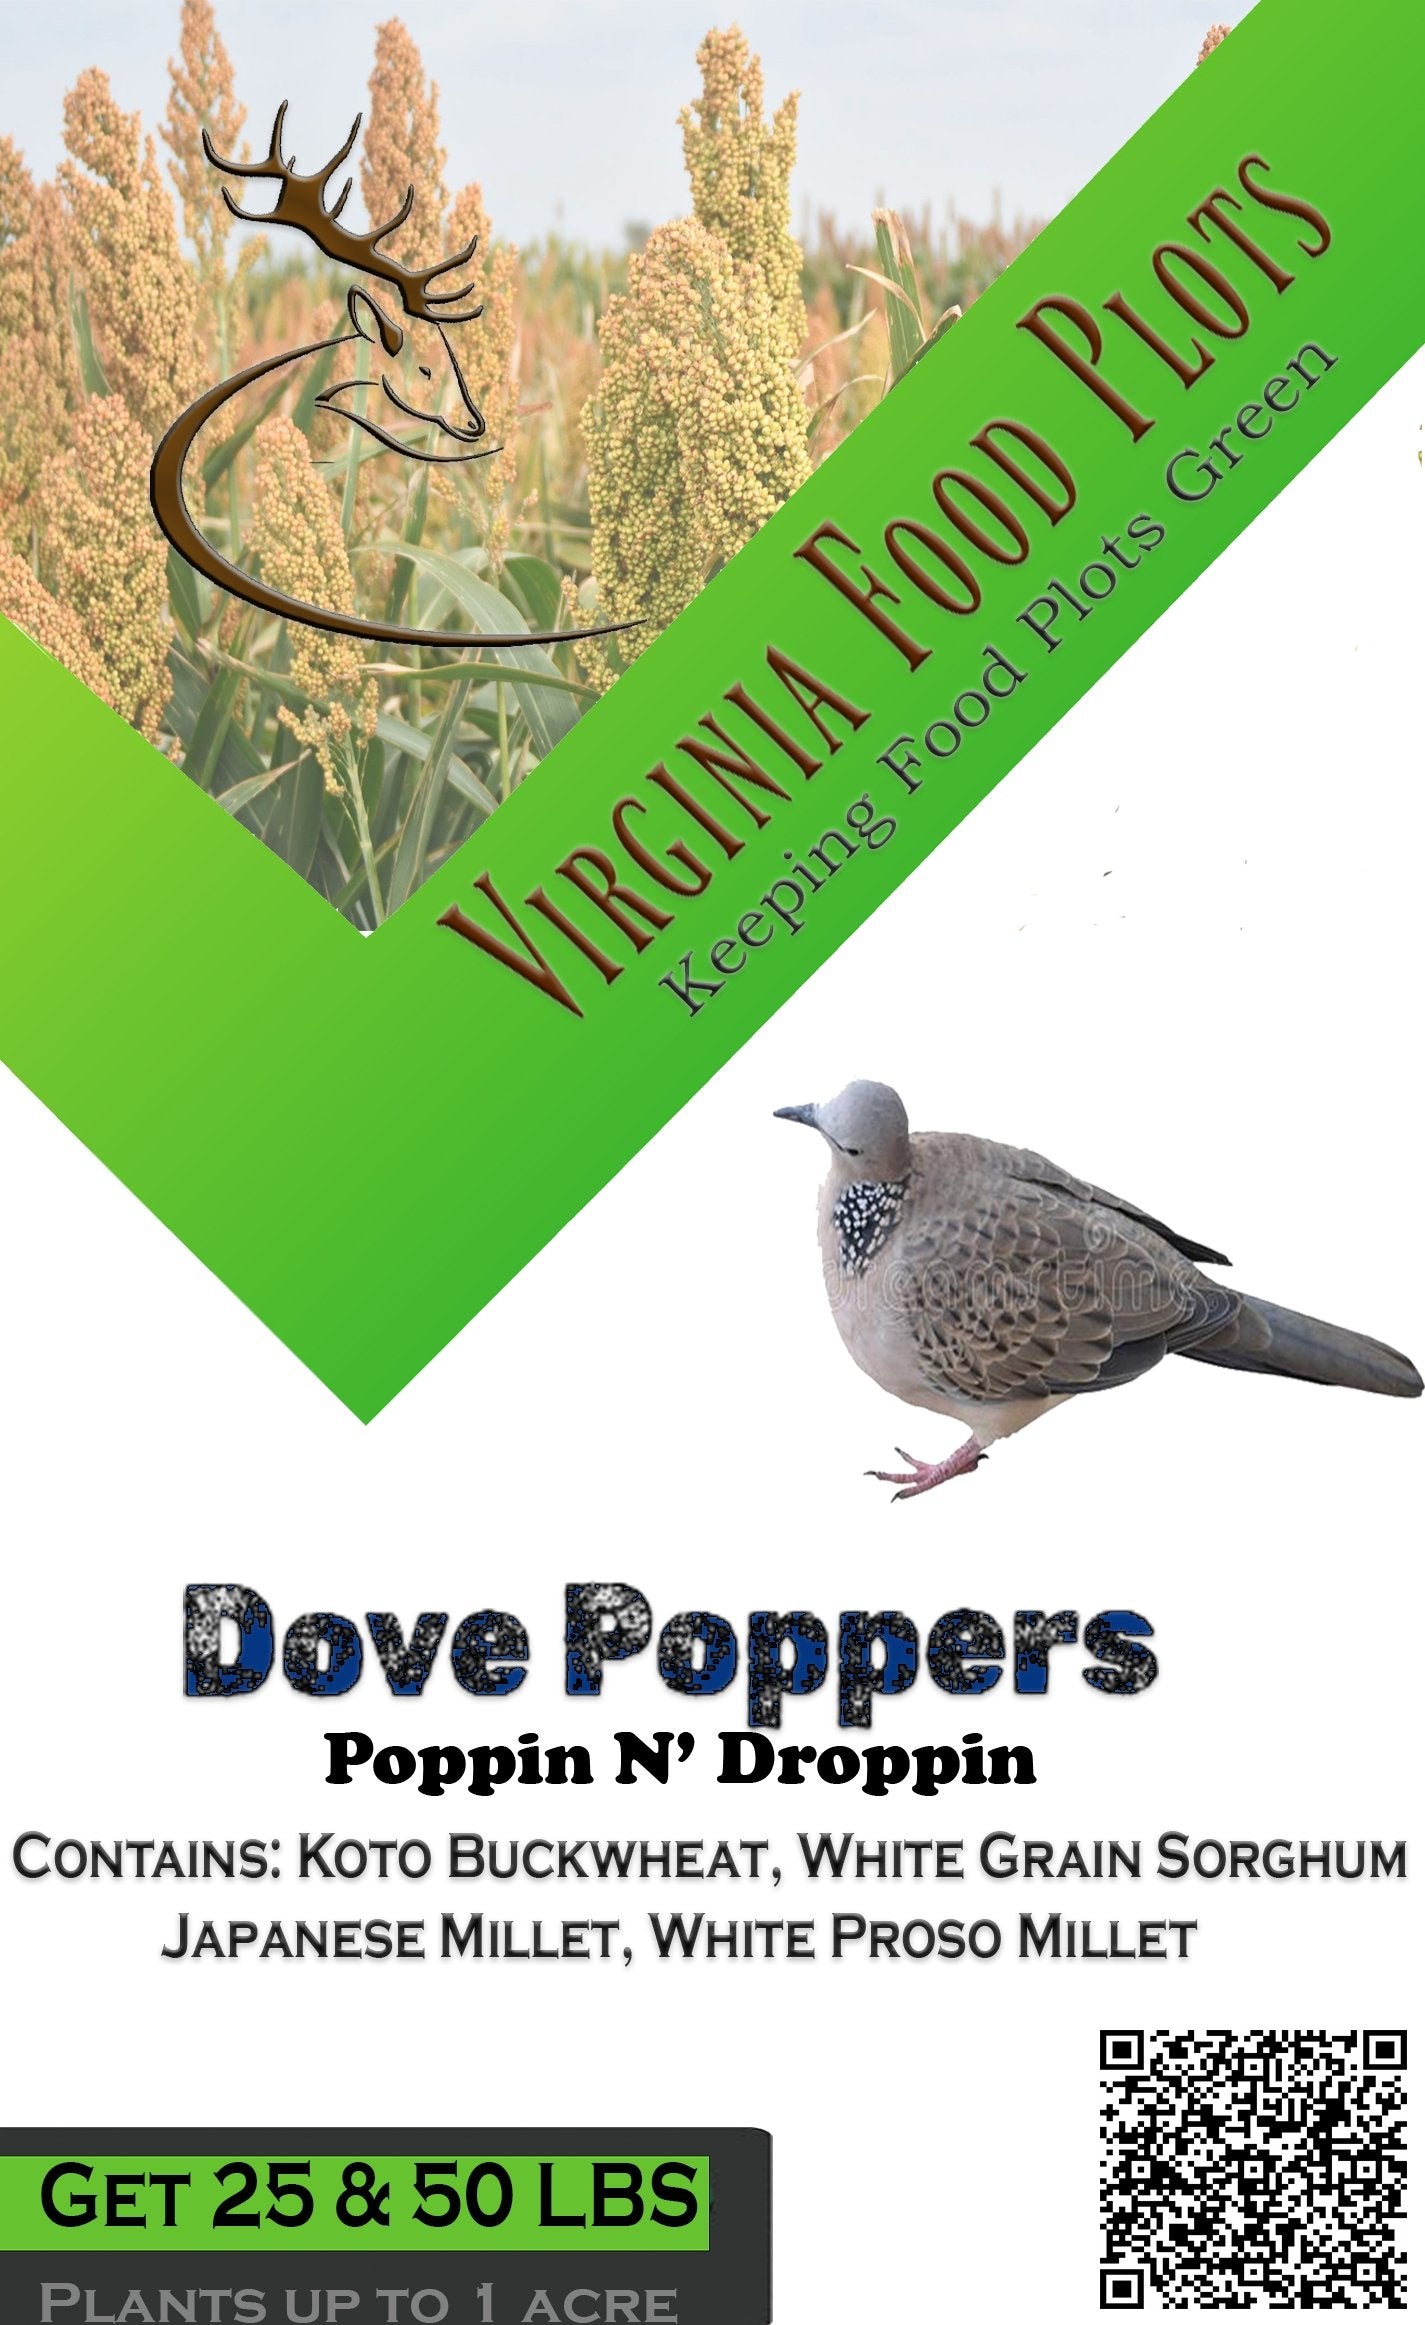 Introducing Dove Poppers - Virginia Food Plots | Food Plot Seed